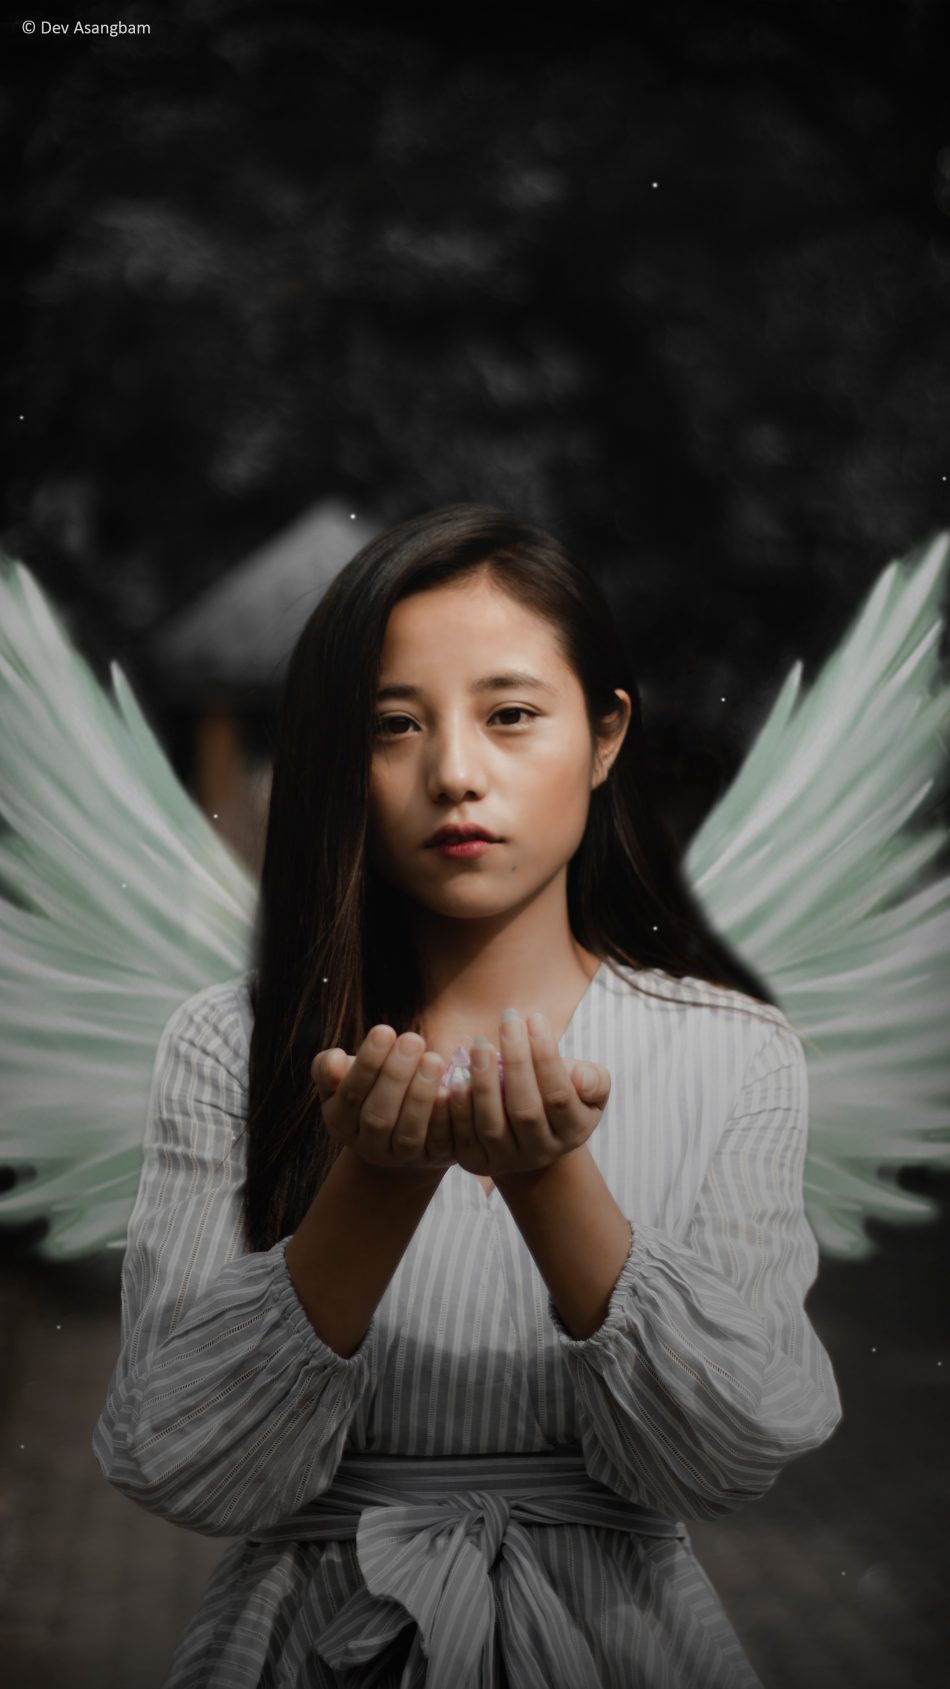 Beautiful Angelic Girl Photography 4K Ultra HD Mobile Wallpaper